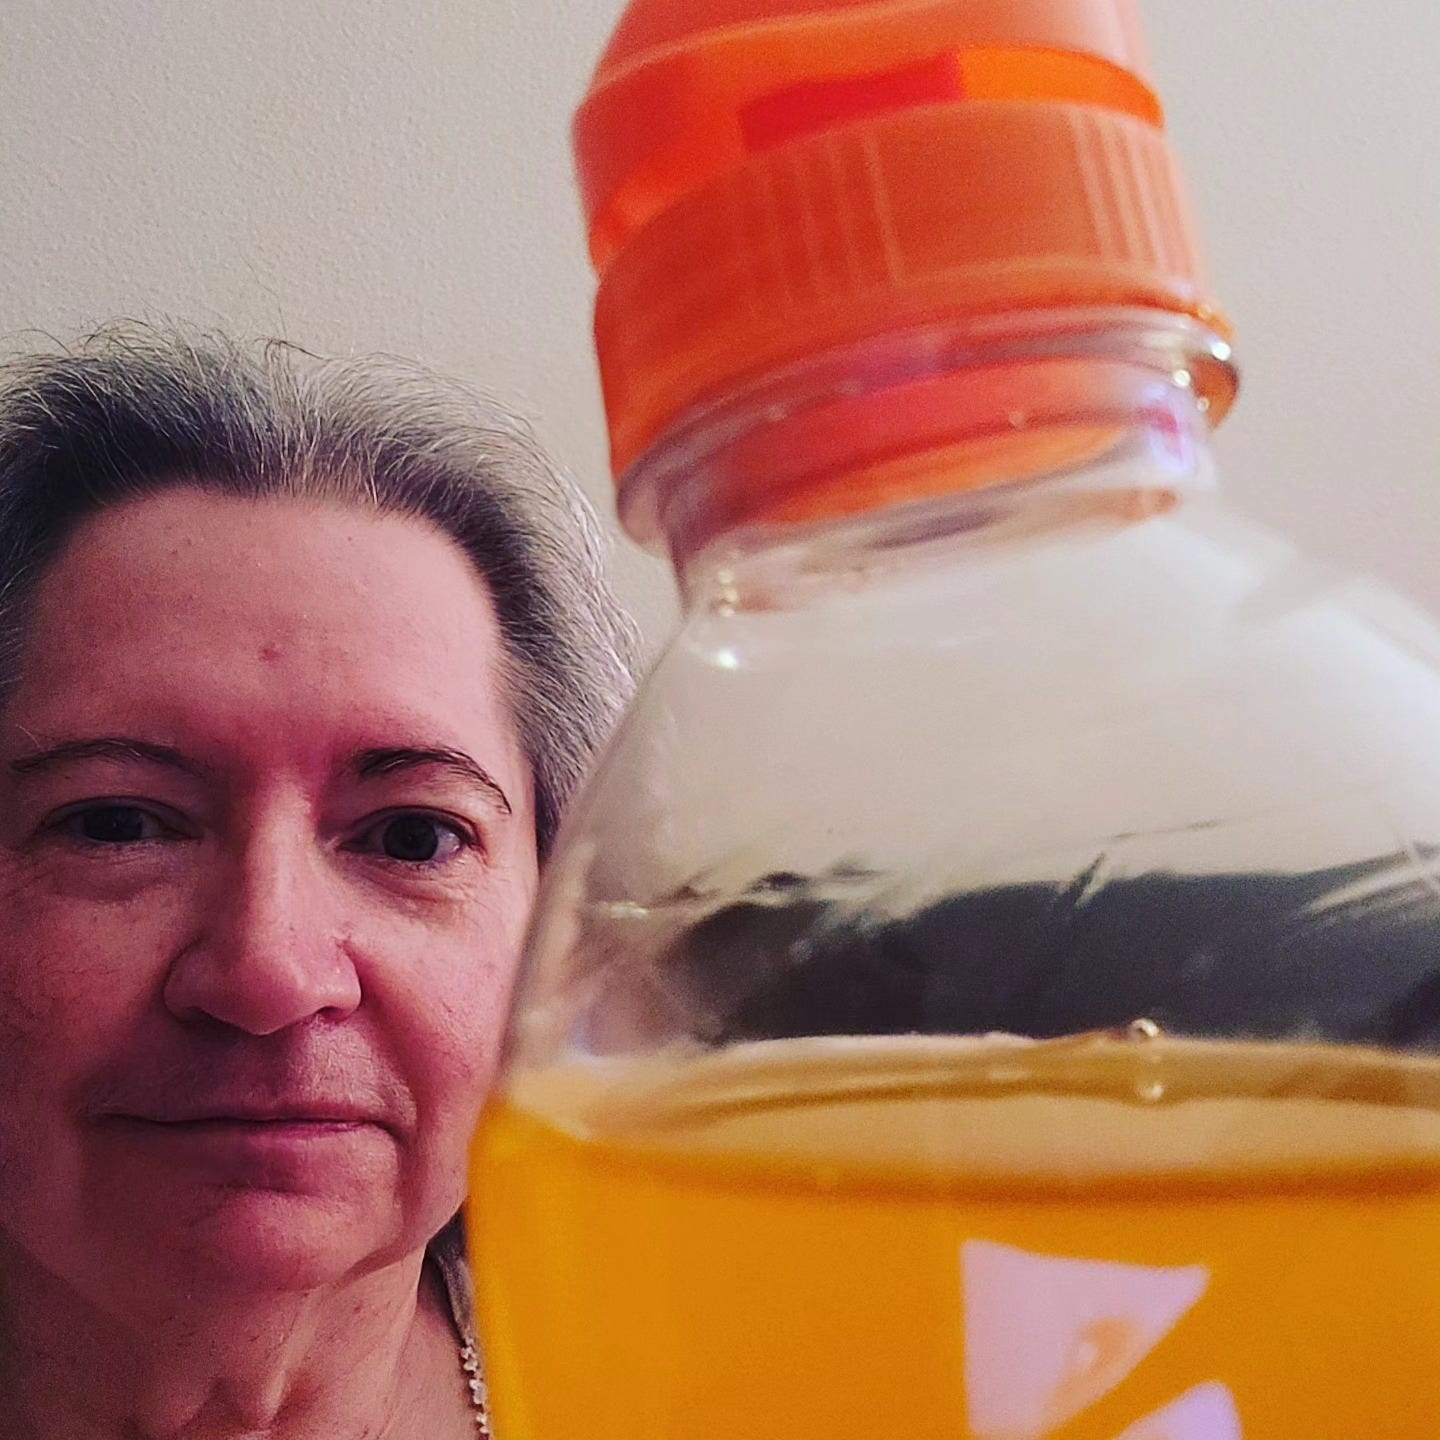 woman with a large bottle of orange Gatorade